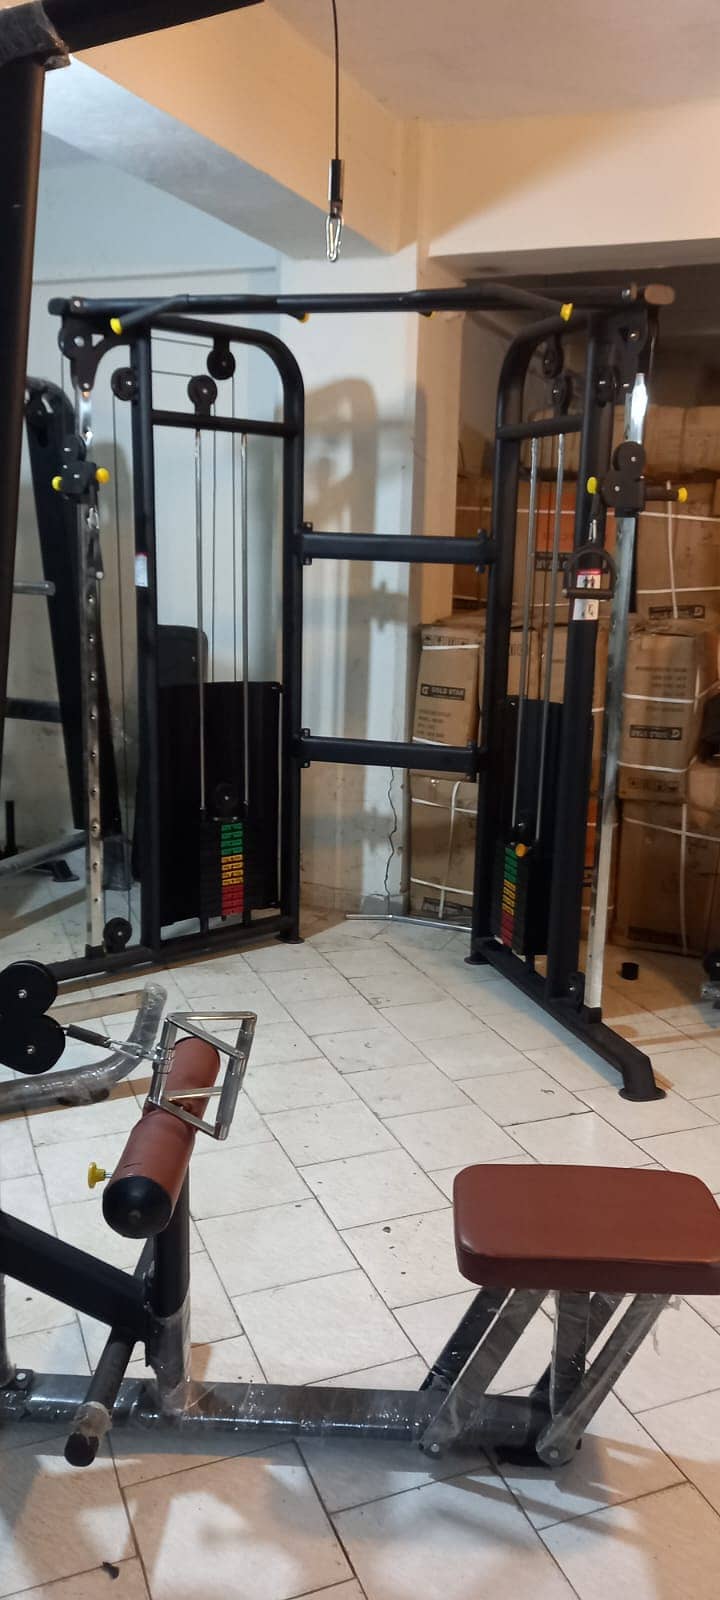 Full Gym Equipment setup Commercial Strength treadmil elliptical cable 3